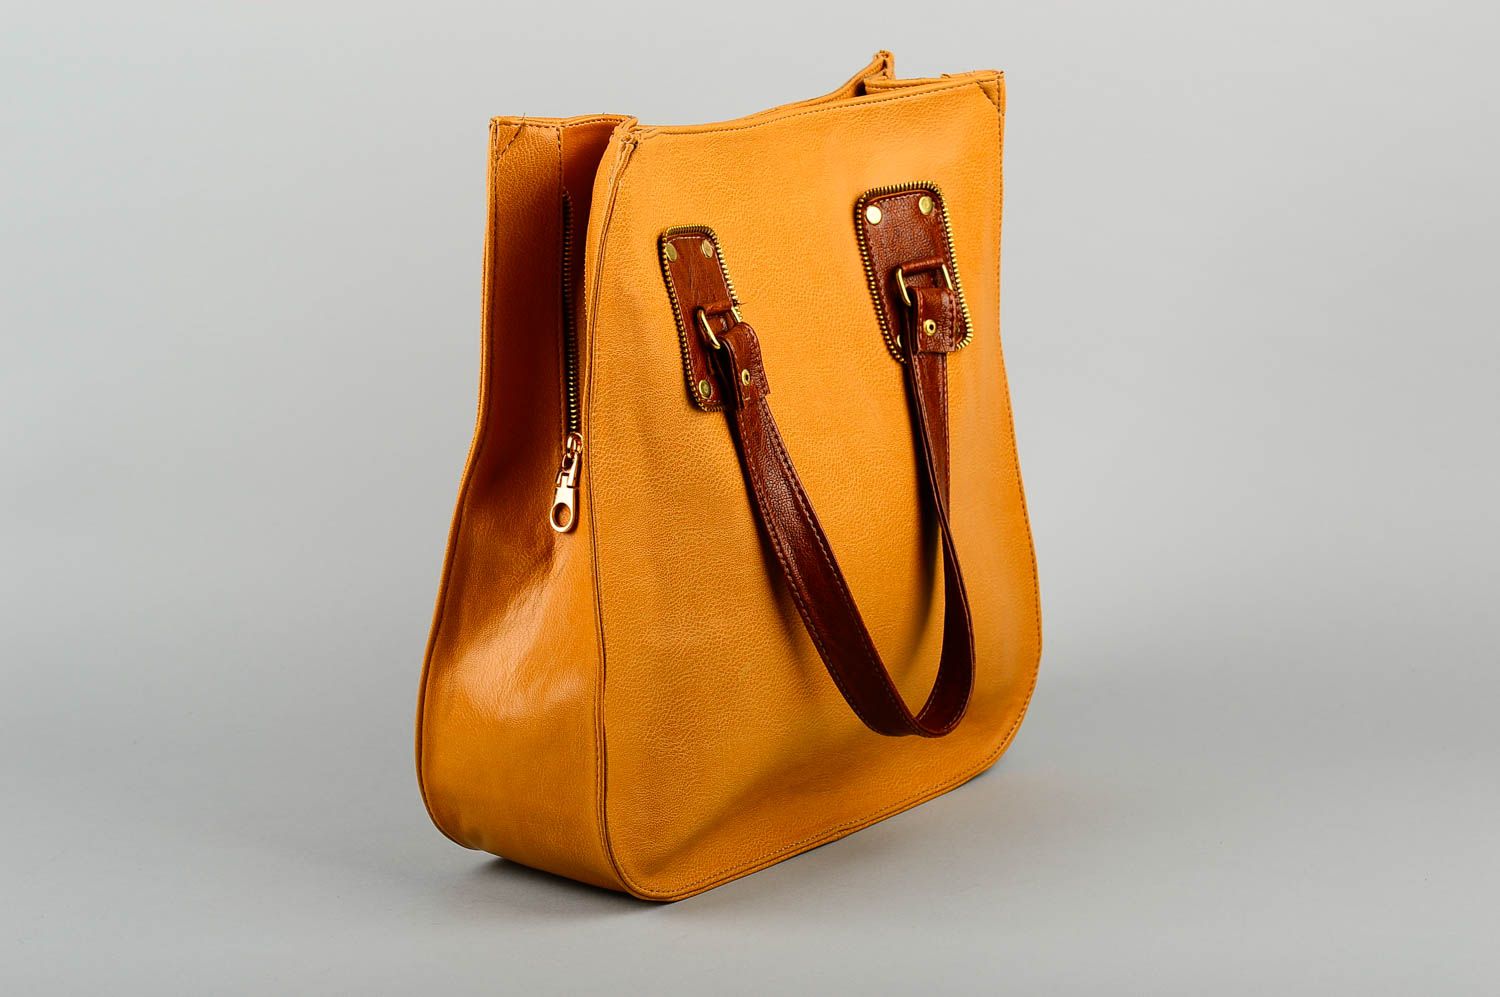 Stylish handmade bag design leather handbag luxury bags for girls gifts for her photo 1